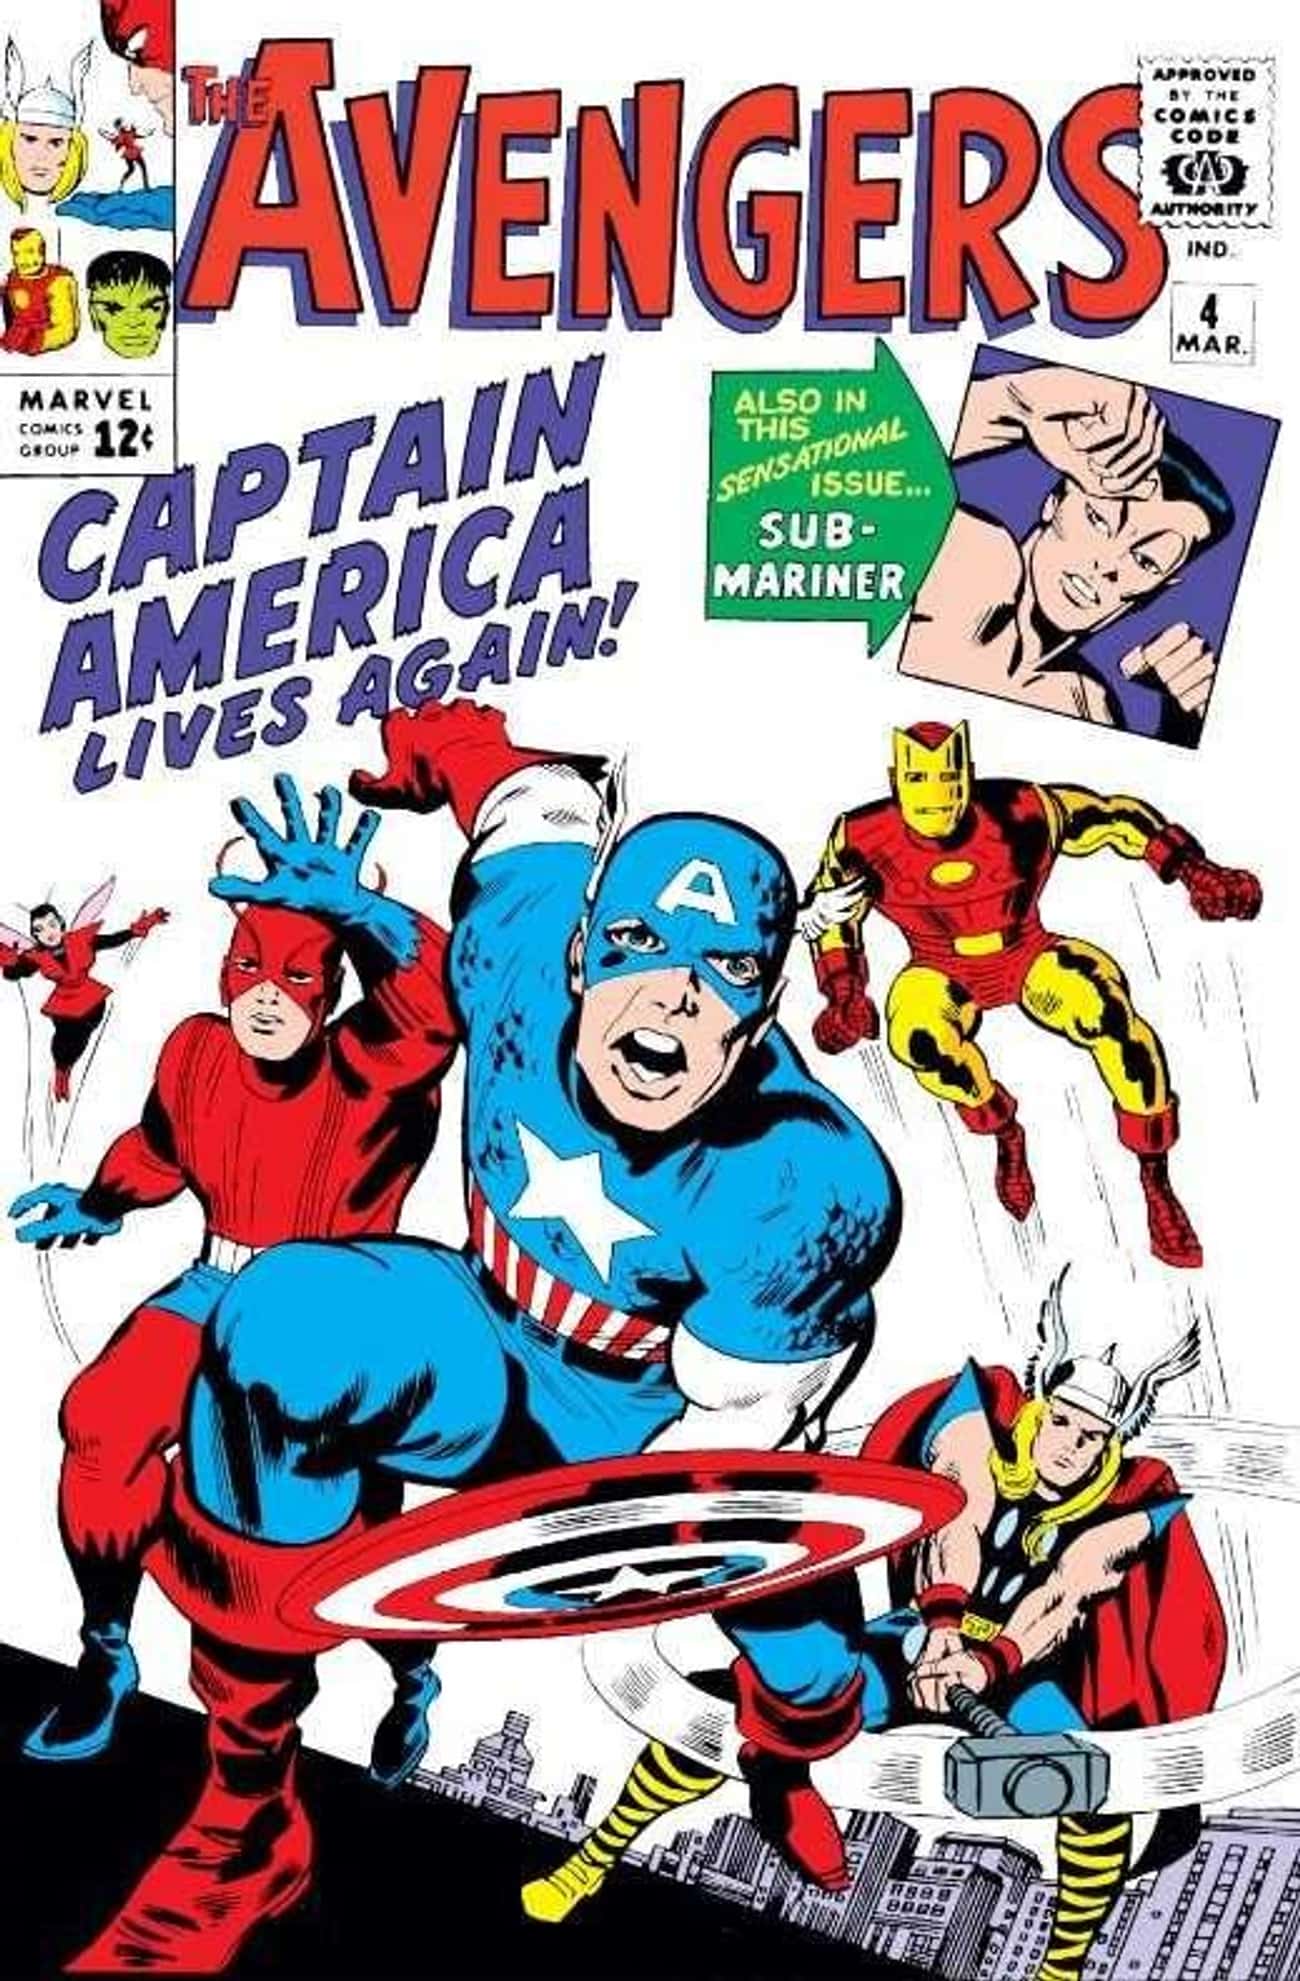 The Return of Captain America